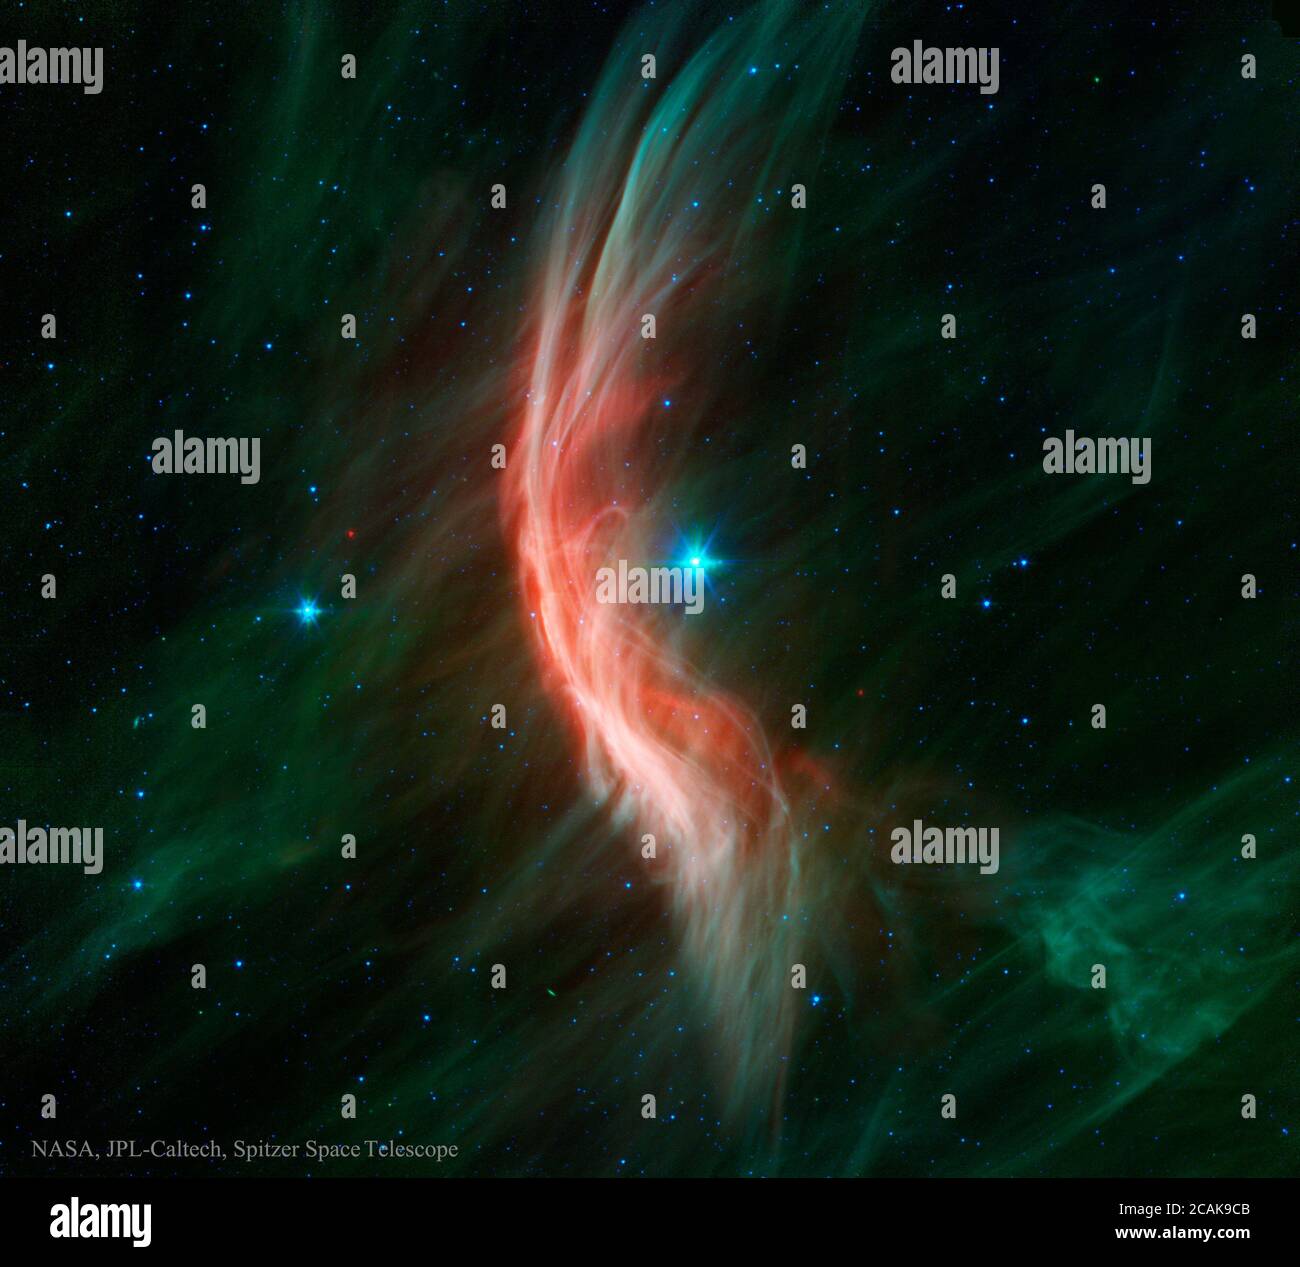 Zeta Oph, Runaway Star Image  by NASA, JPL-Caltech, Spitzer Space Telescope Stock Photo